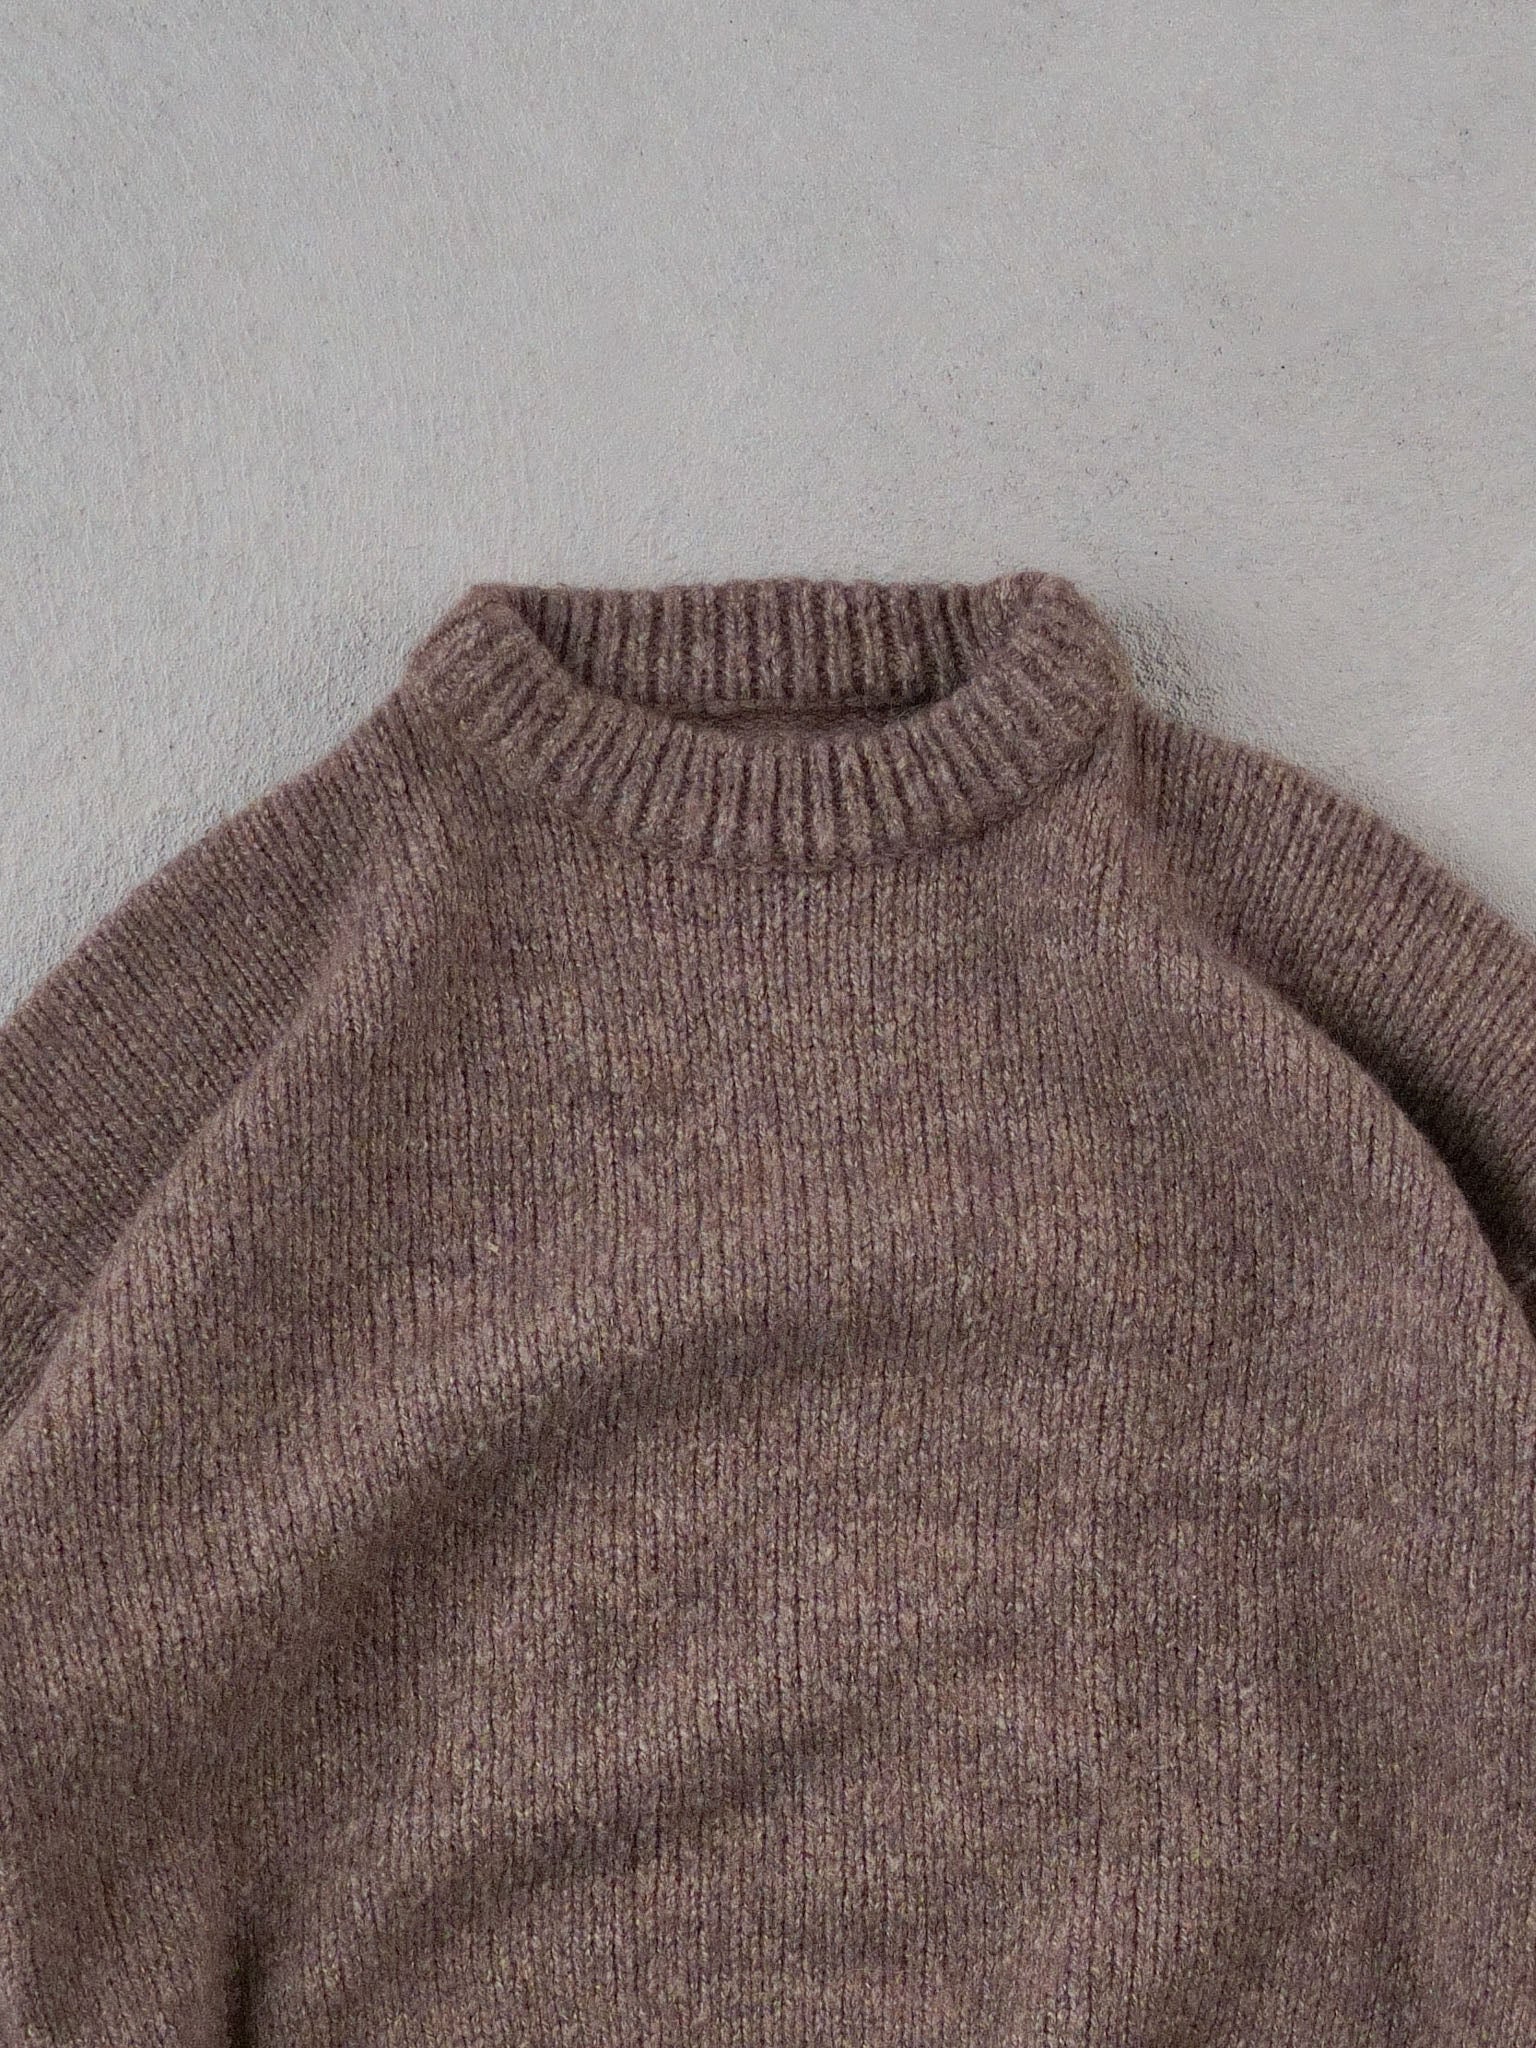 Vintage 80s Brown Knit Sweater (M/L)